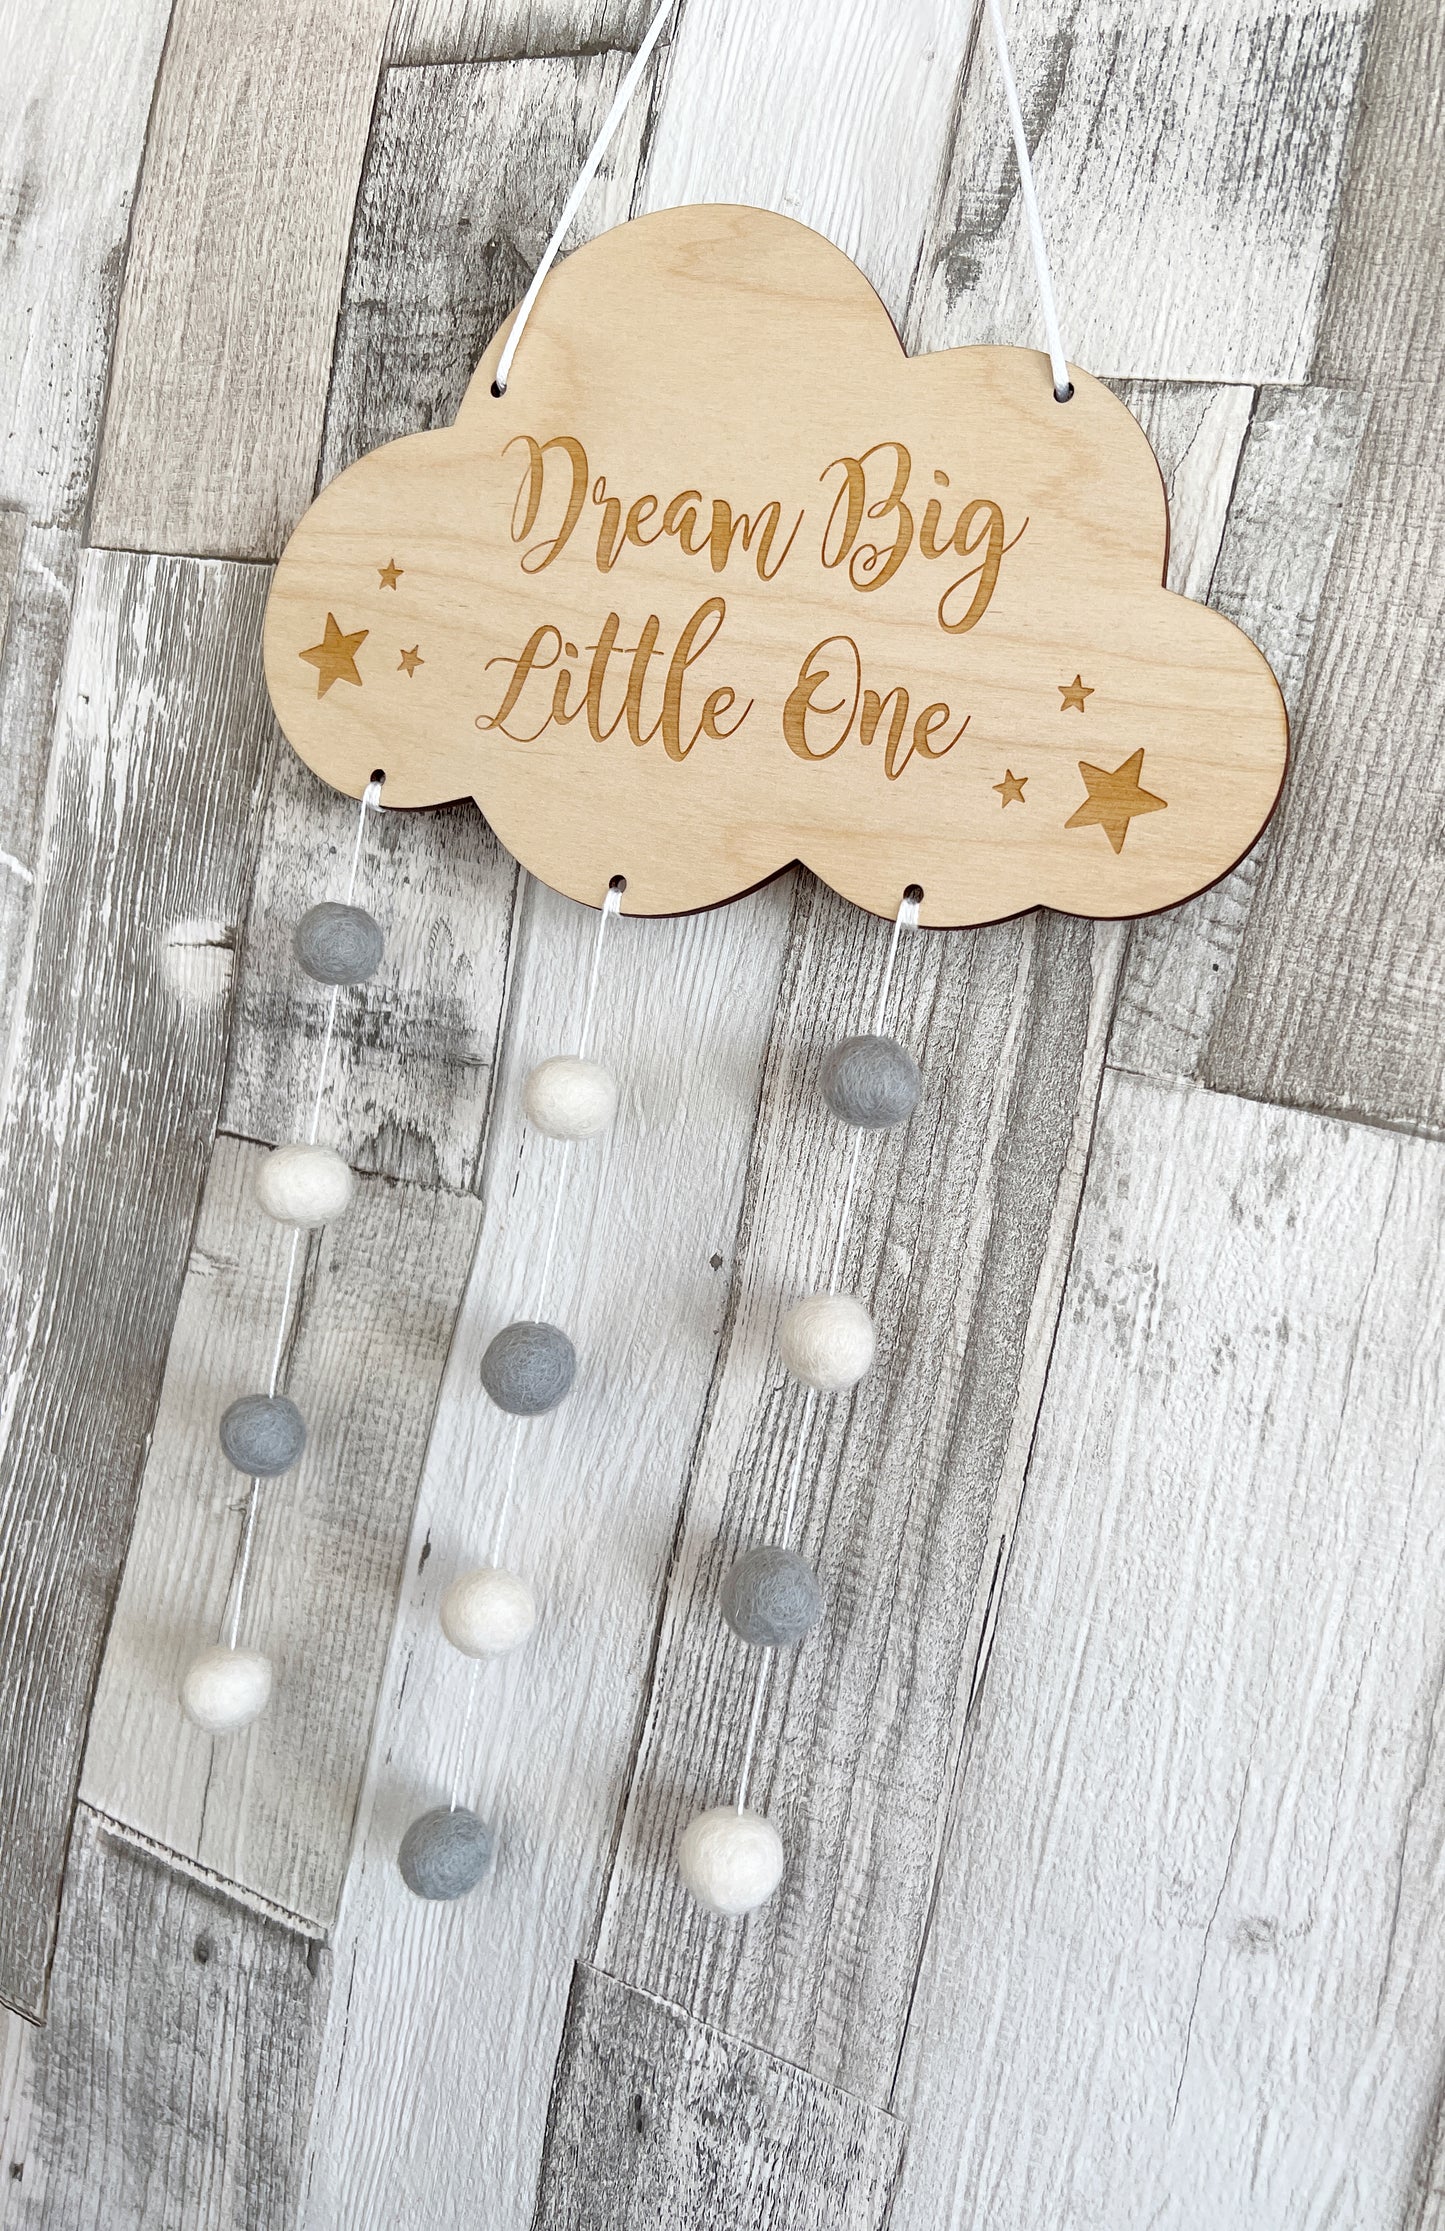 Dream Big Little One Mini Felt Ball Wall Mobile - Light Grey & Ivory